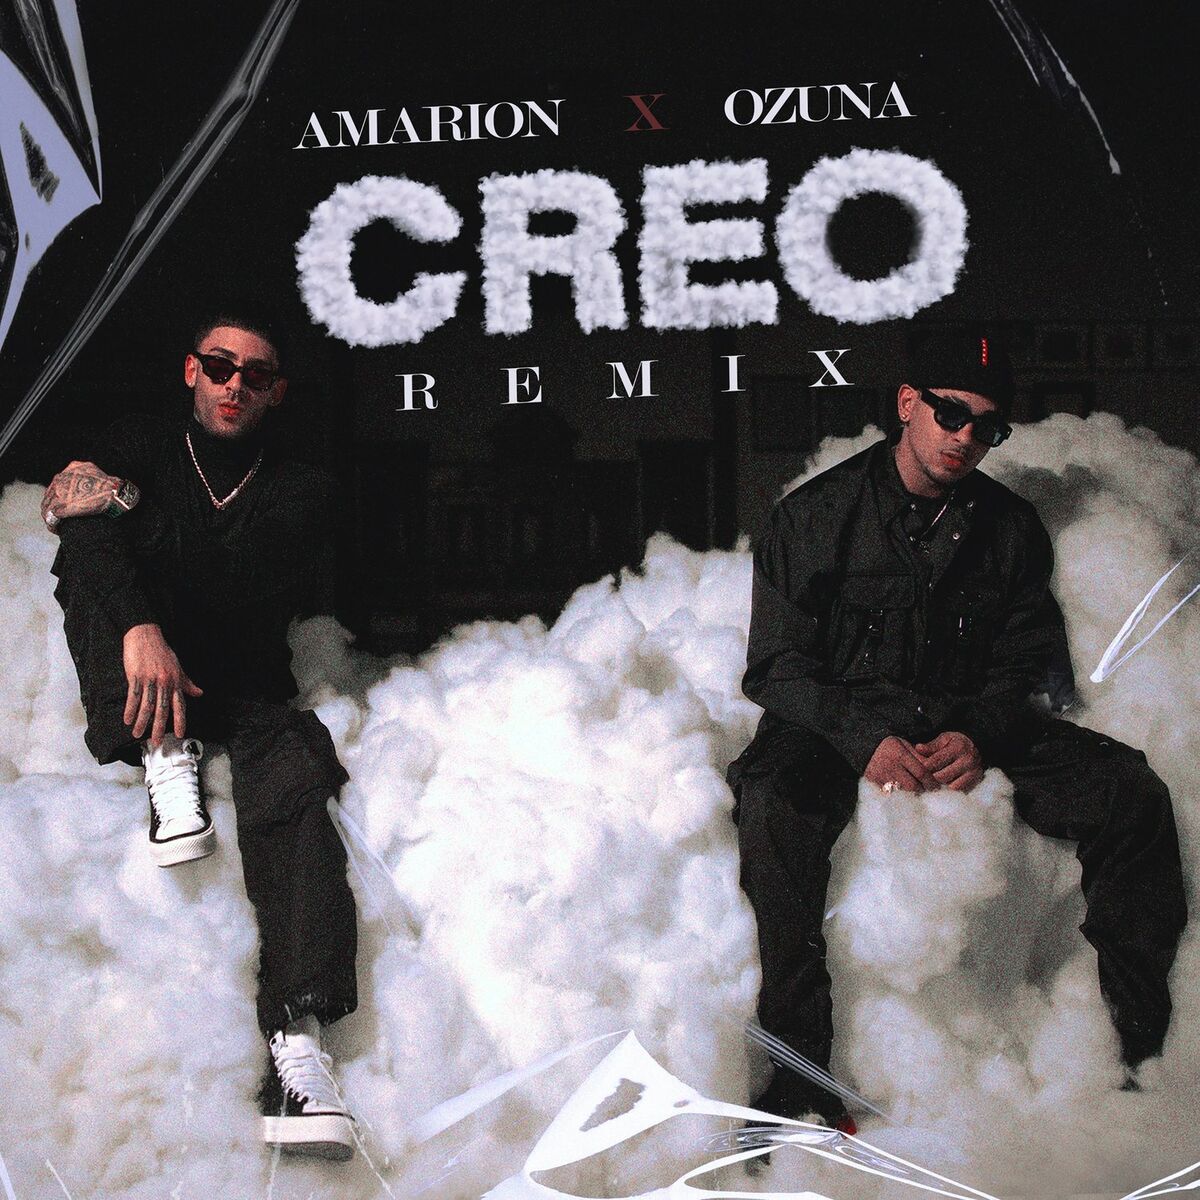 Amarion X Ozuna - Creo (Remix).mp3